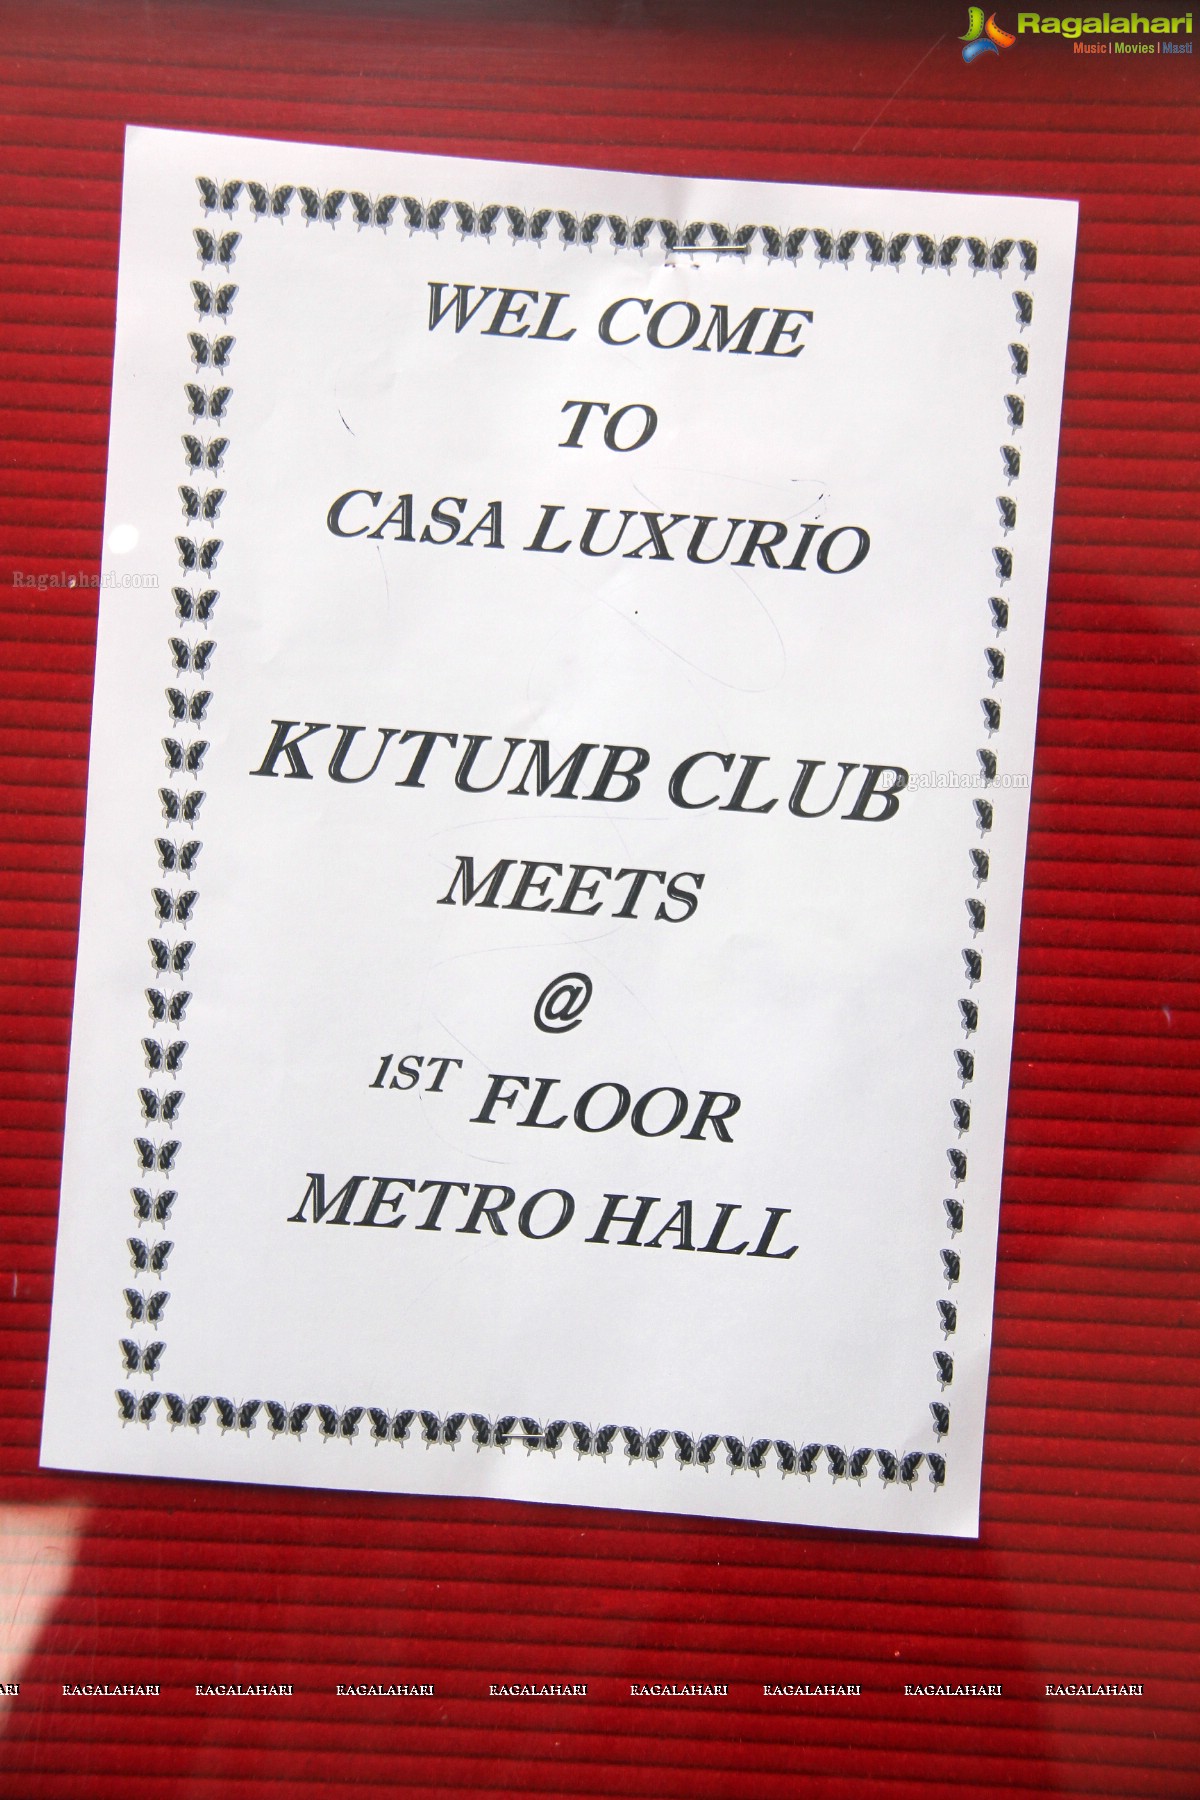 Kutumb Club Get-Together at Casa Luxurio